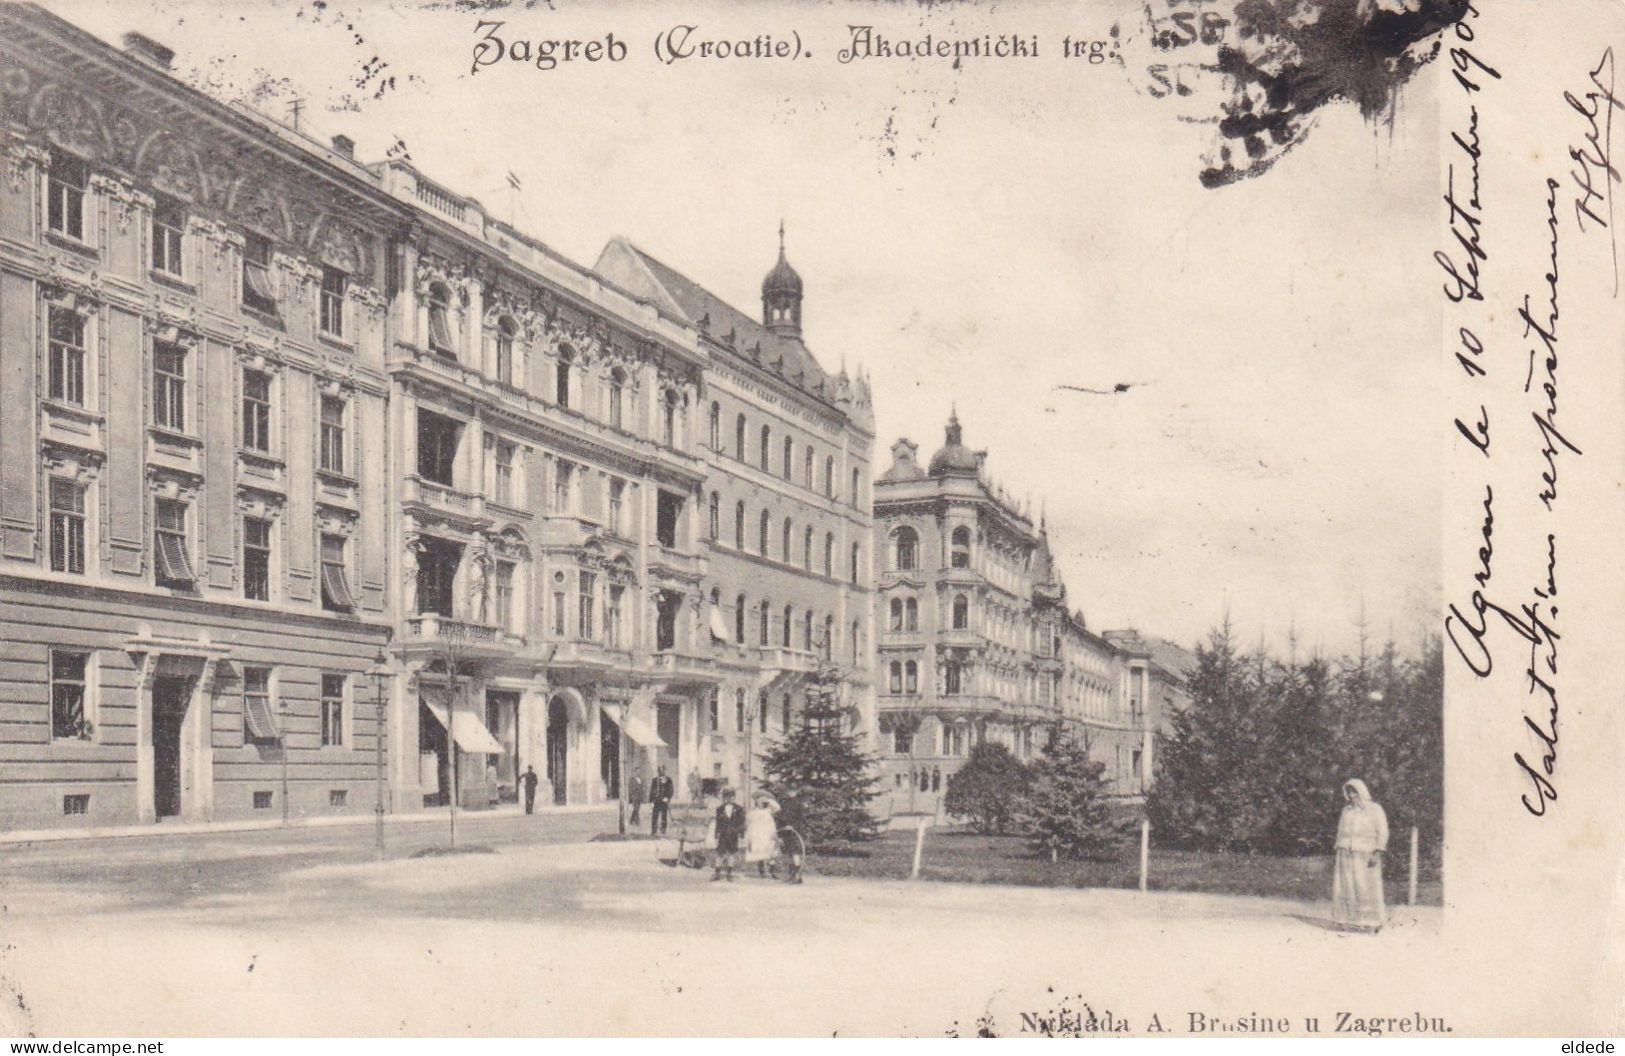 Zagreb Croatie Akademicki Trg.  P. Used 1903 - Croatia